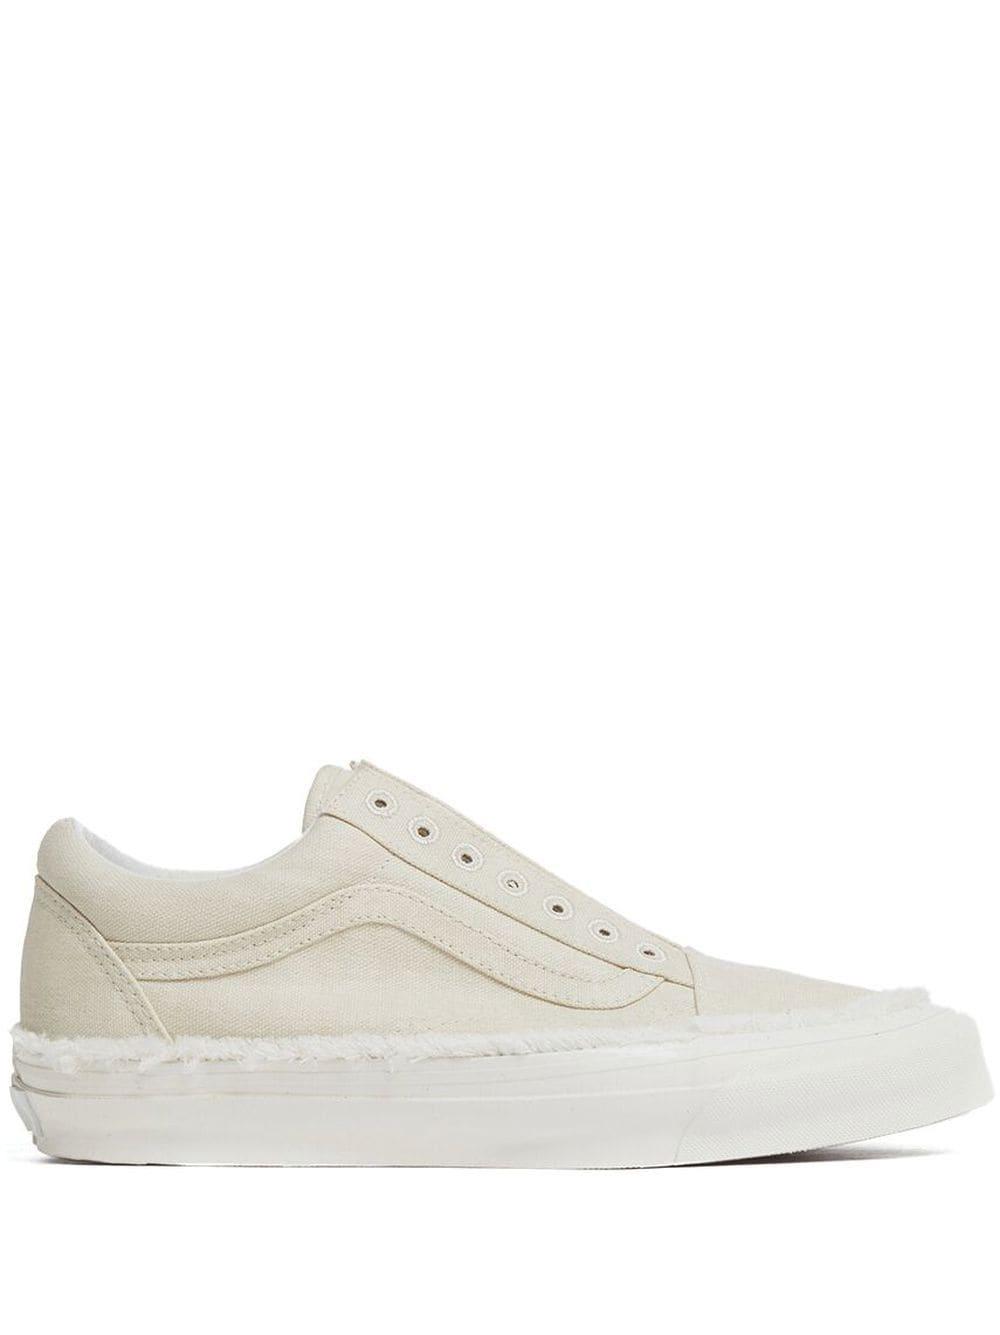 Vans Old Skool Laceless Sneakers in White for Men | Lyst